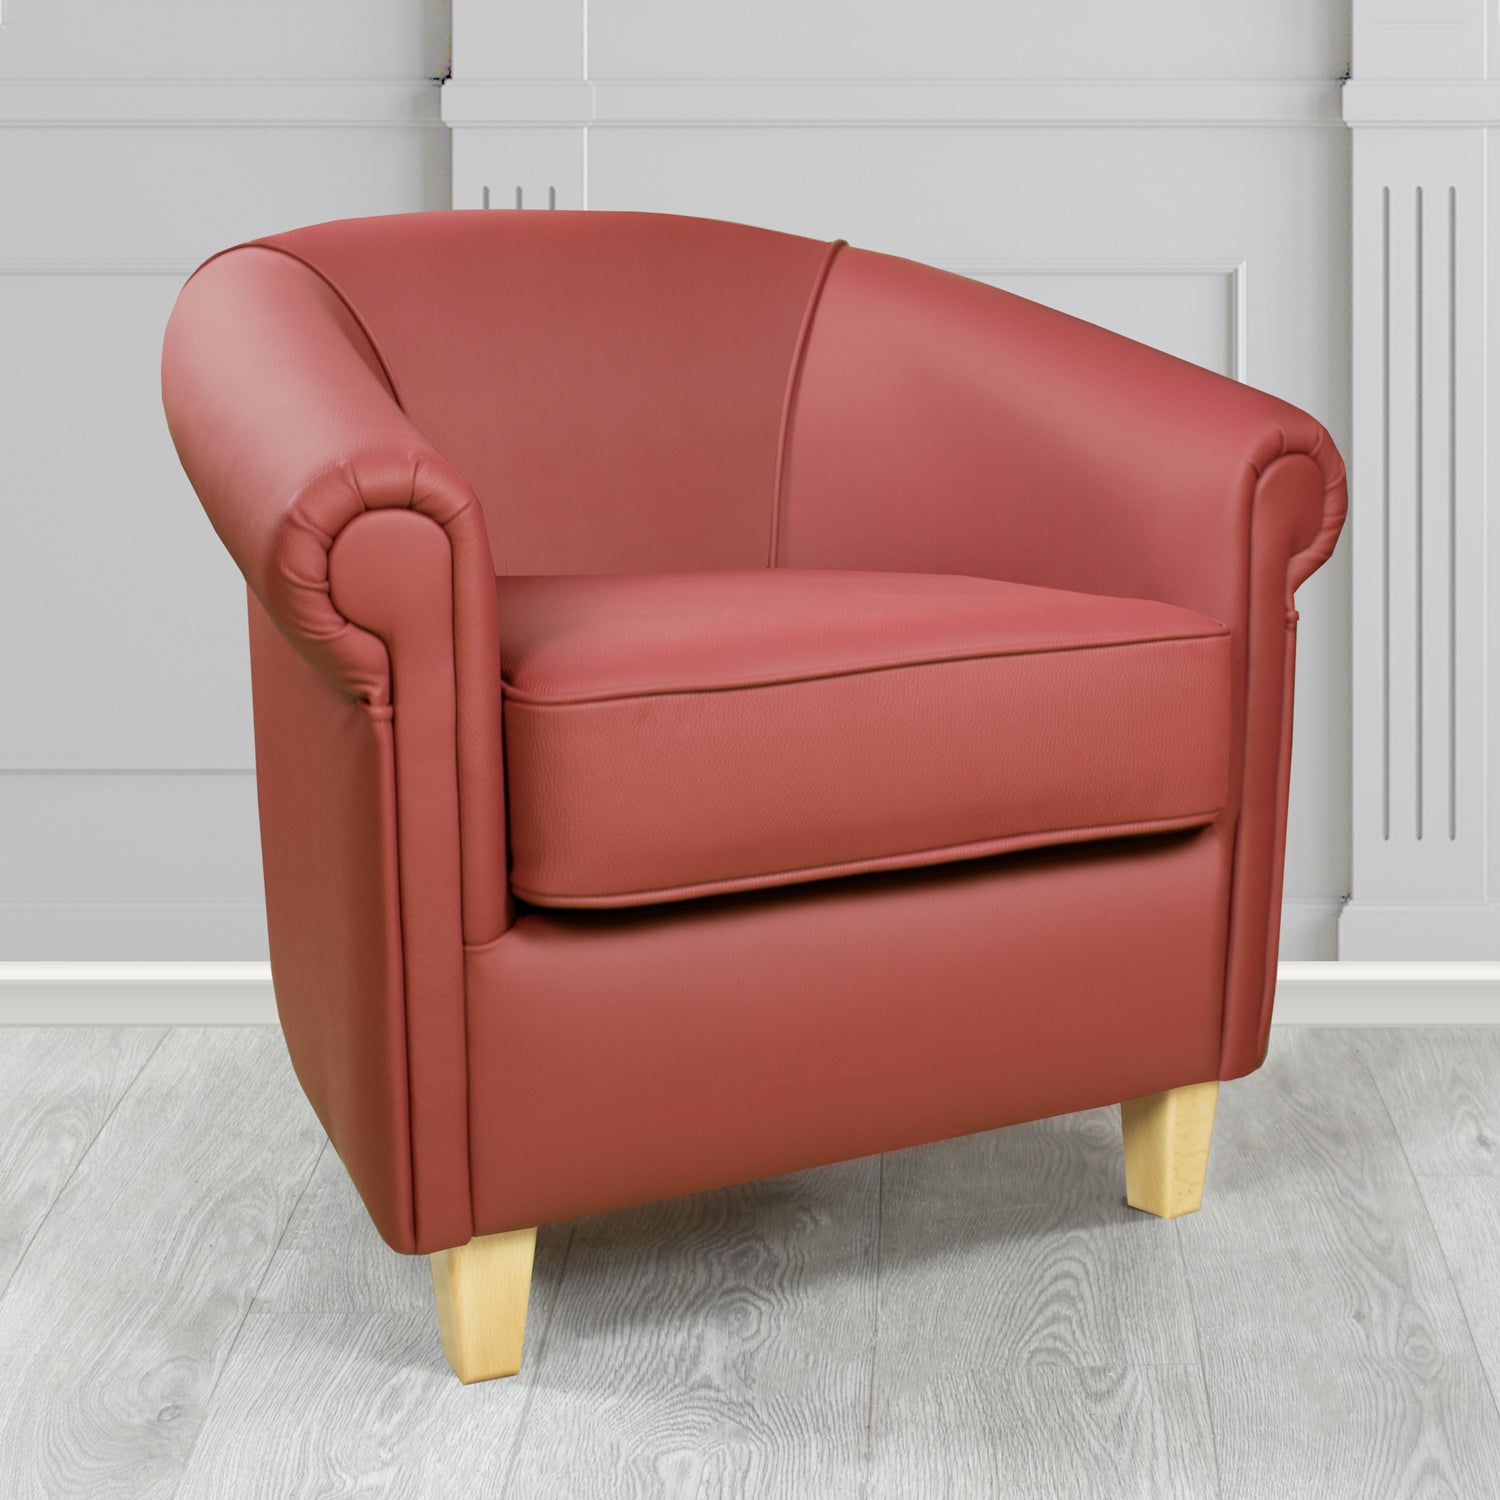 Siena Tub Chair in Crib 5 Shelly West Genuine Leather - The Tub Chair Shop